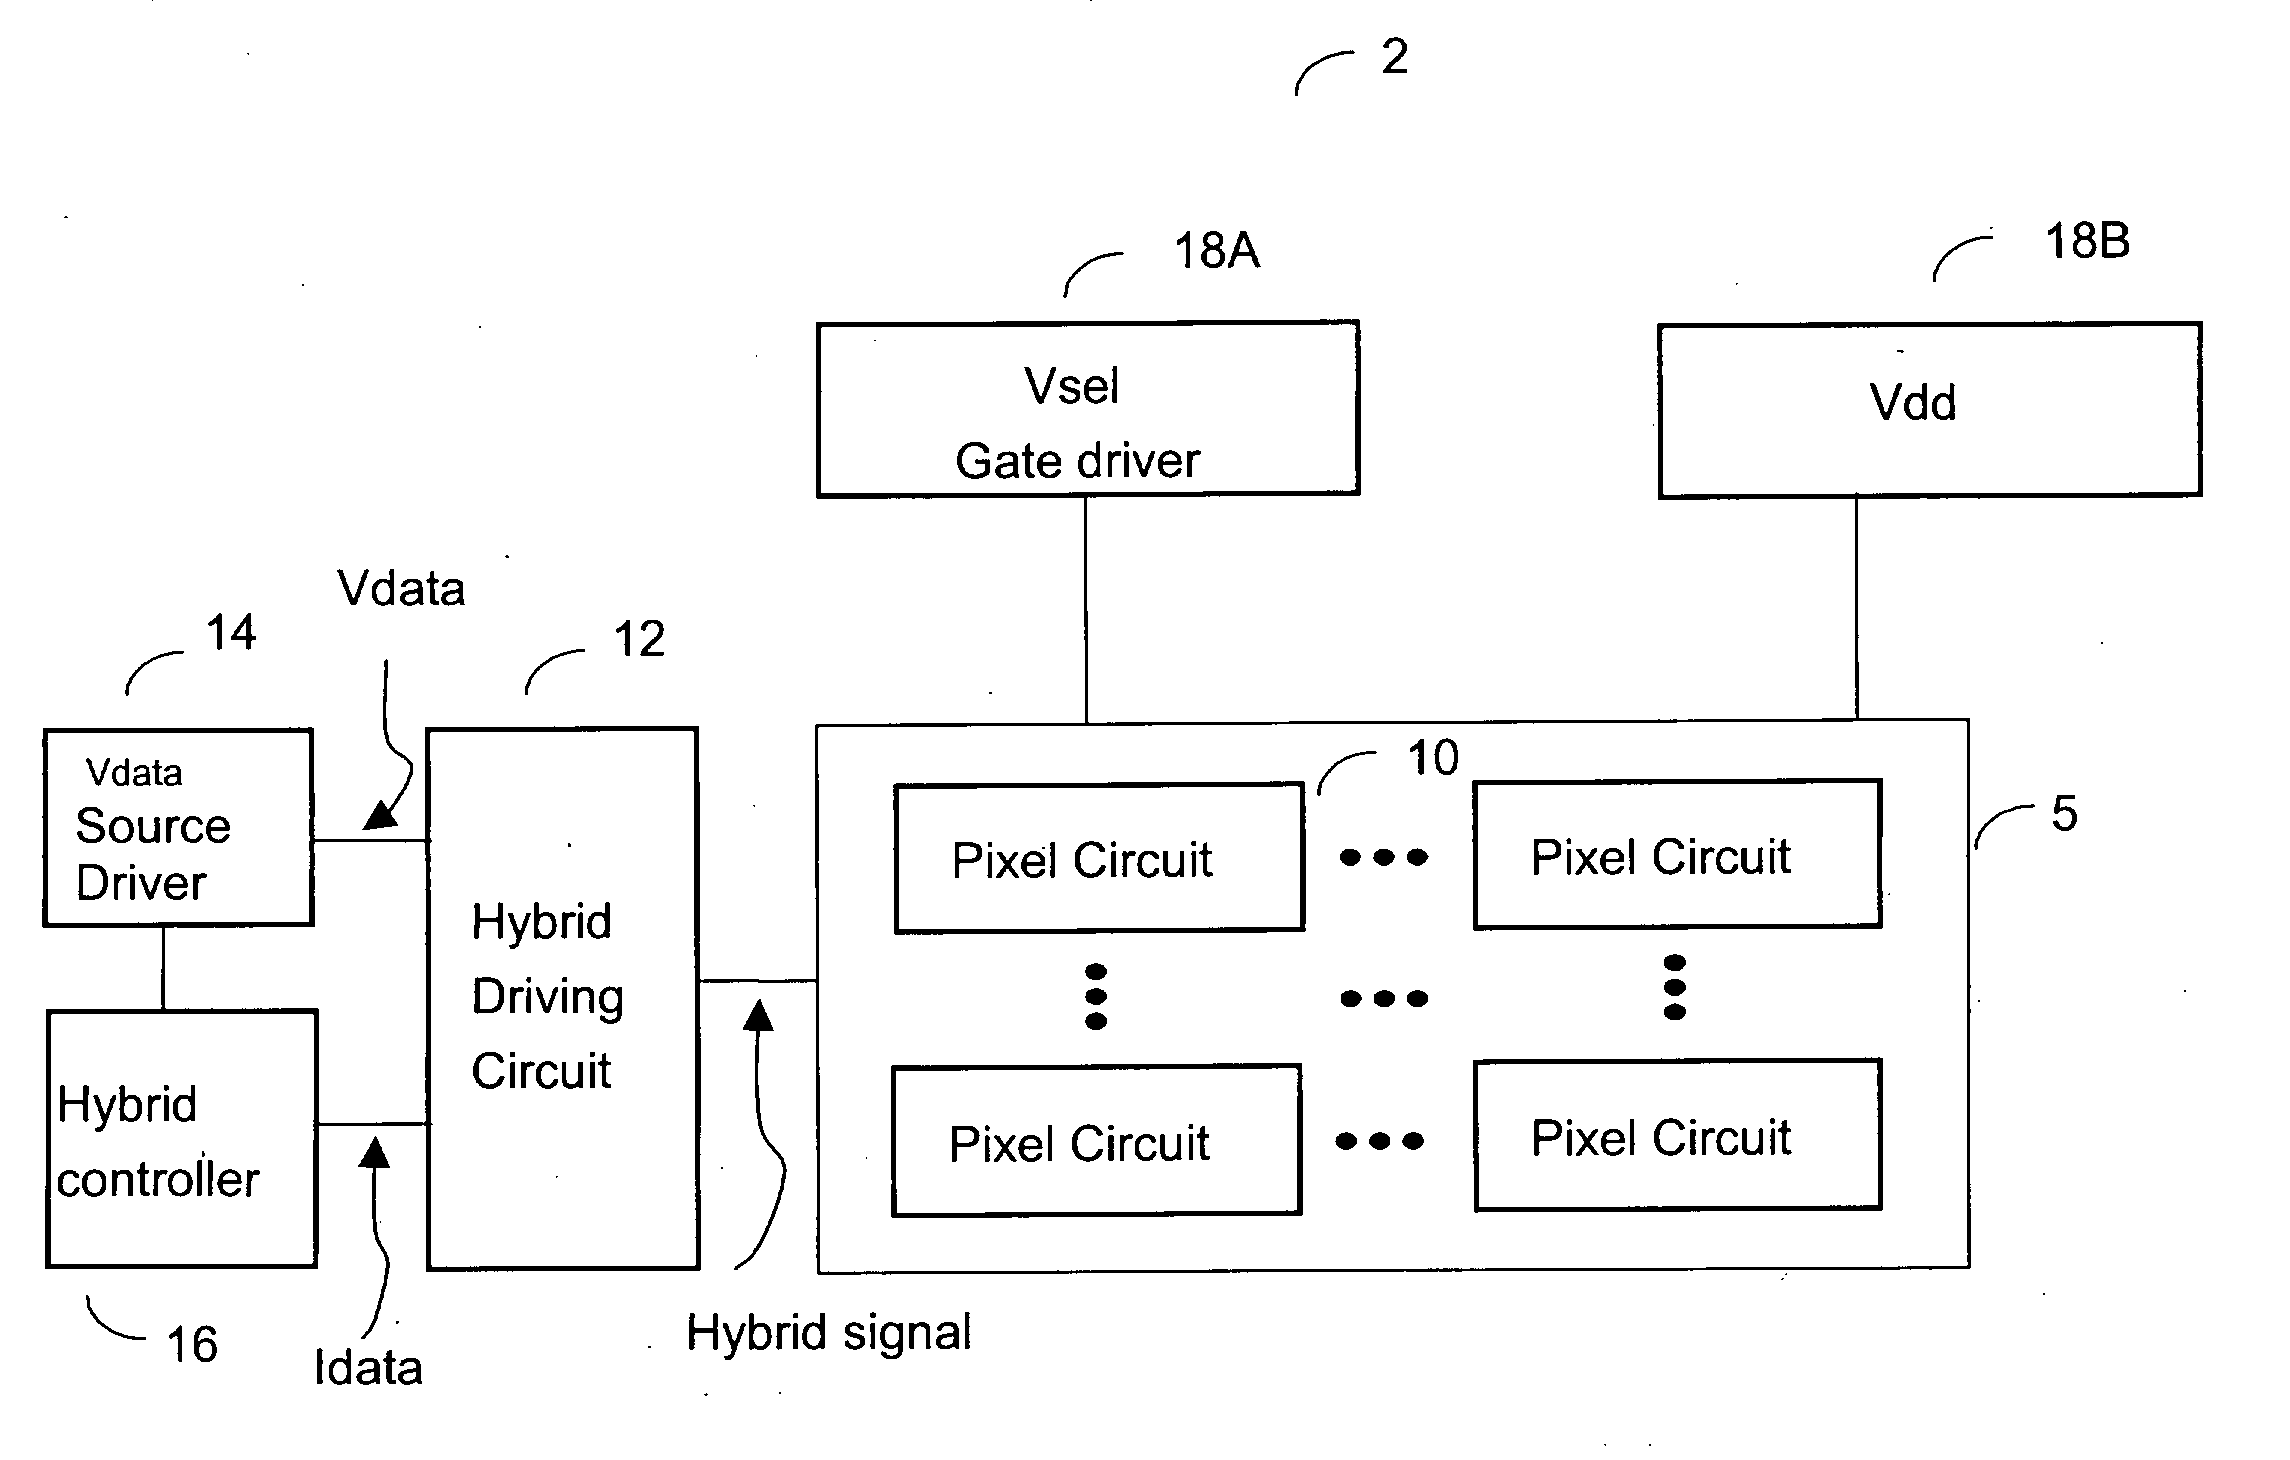 Voltage-Programming Scheme for Current-Driven Arnoled Displays